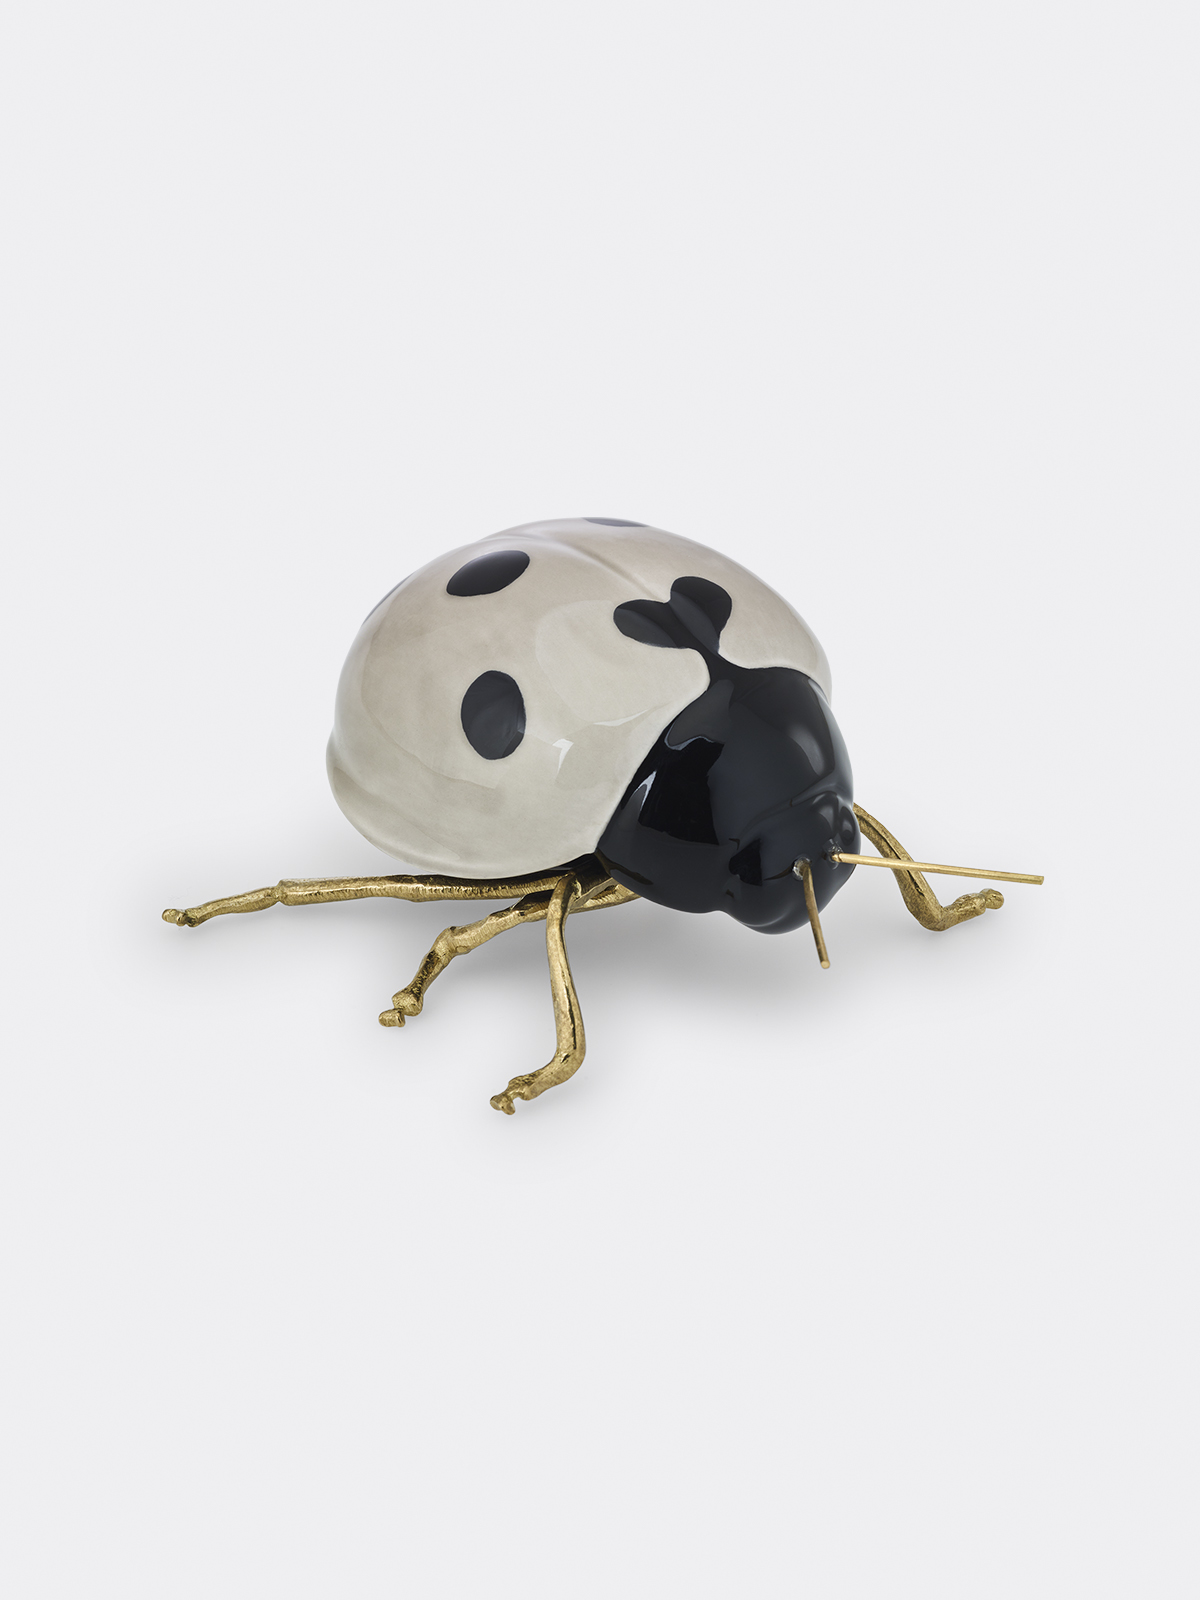 Laboratorio D’Estorias Grey Ladybug with brass legs decorated by hand